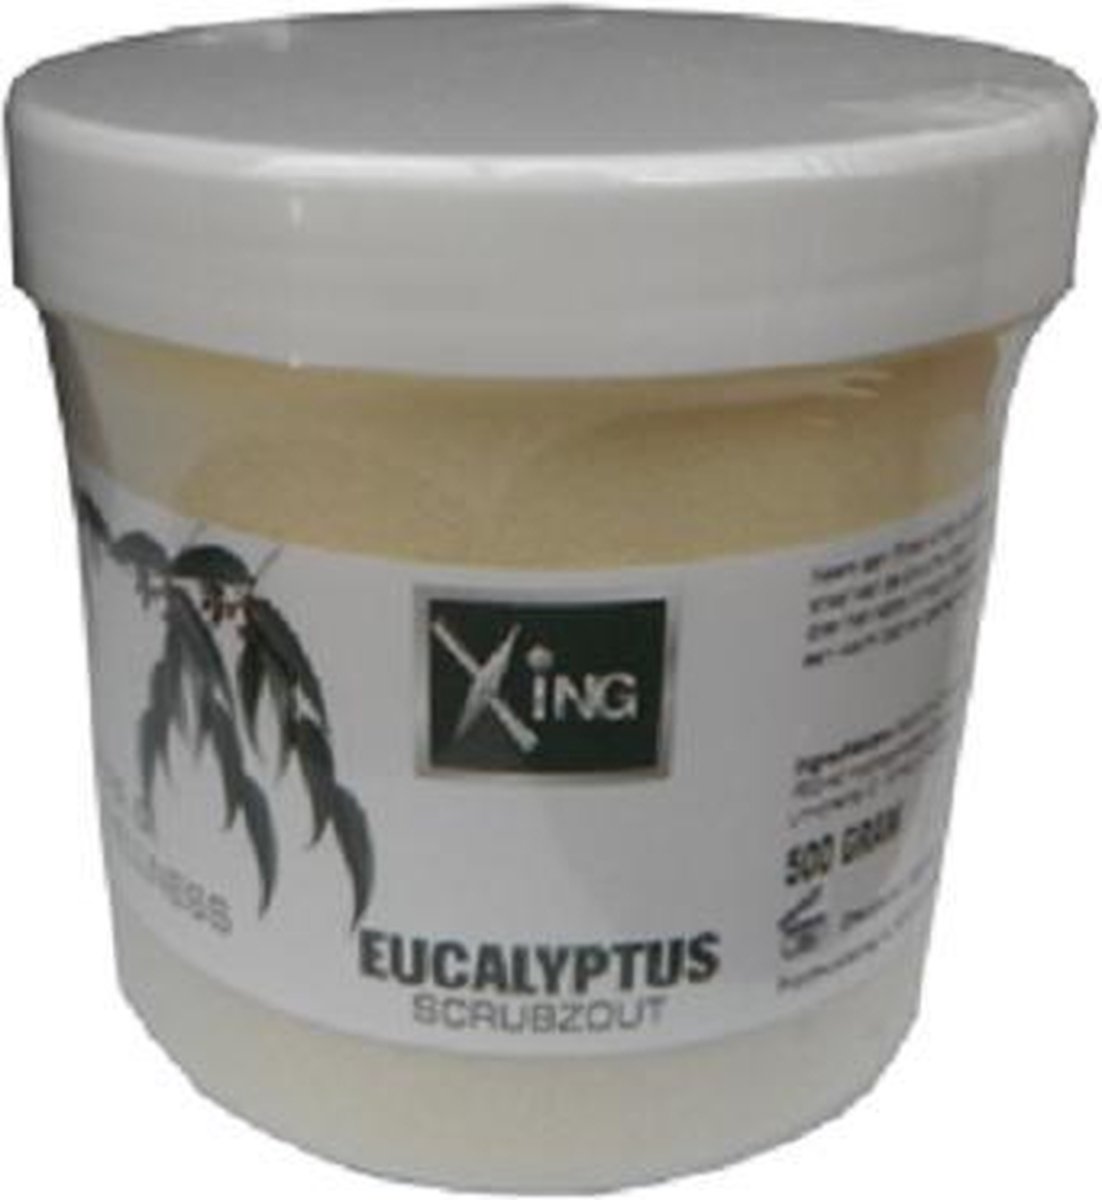 Scrubzout - Xing - Eucalyptus - 500 gr -